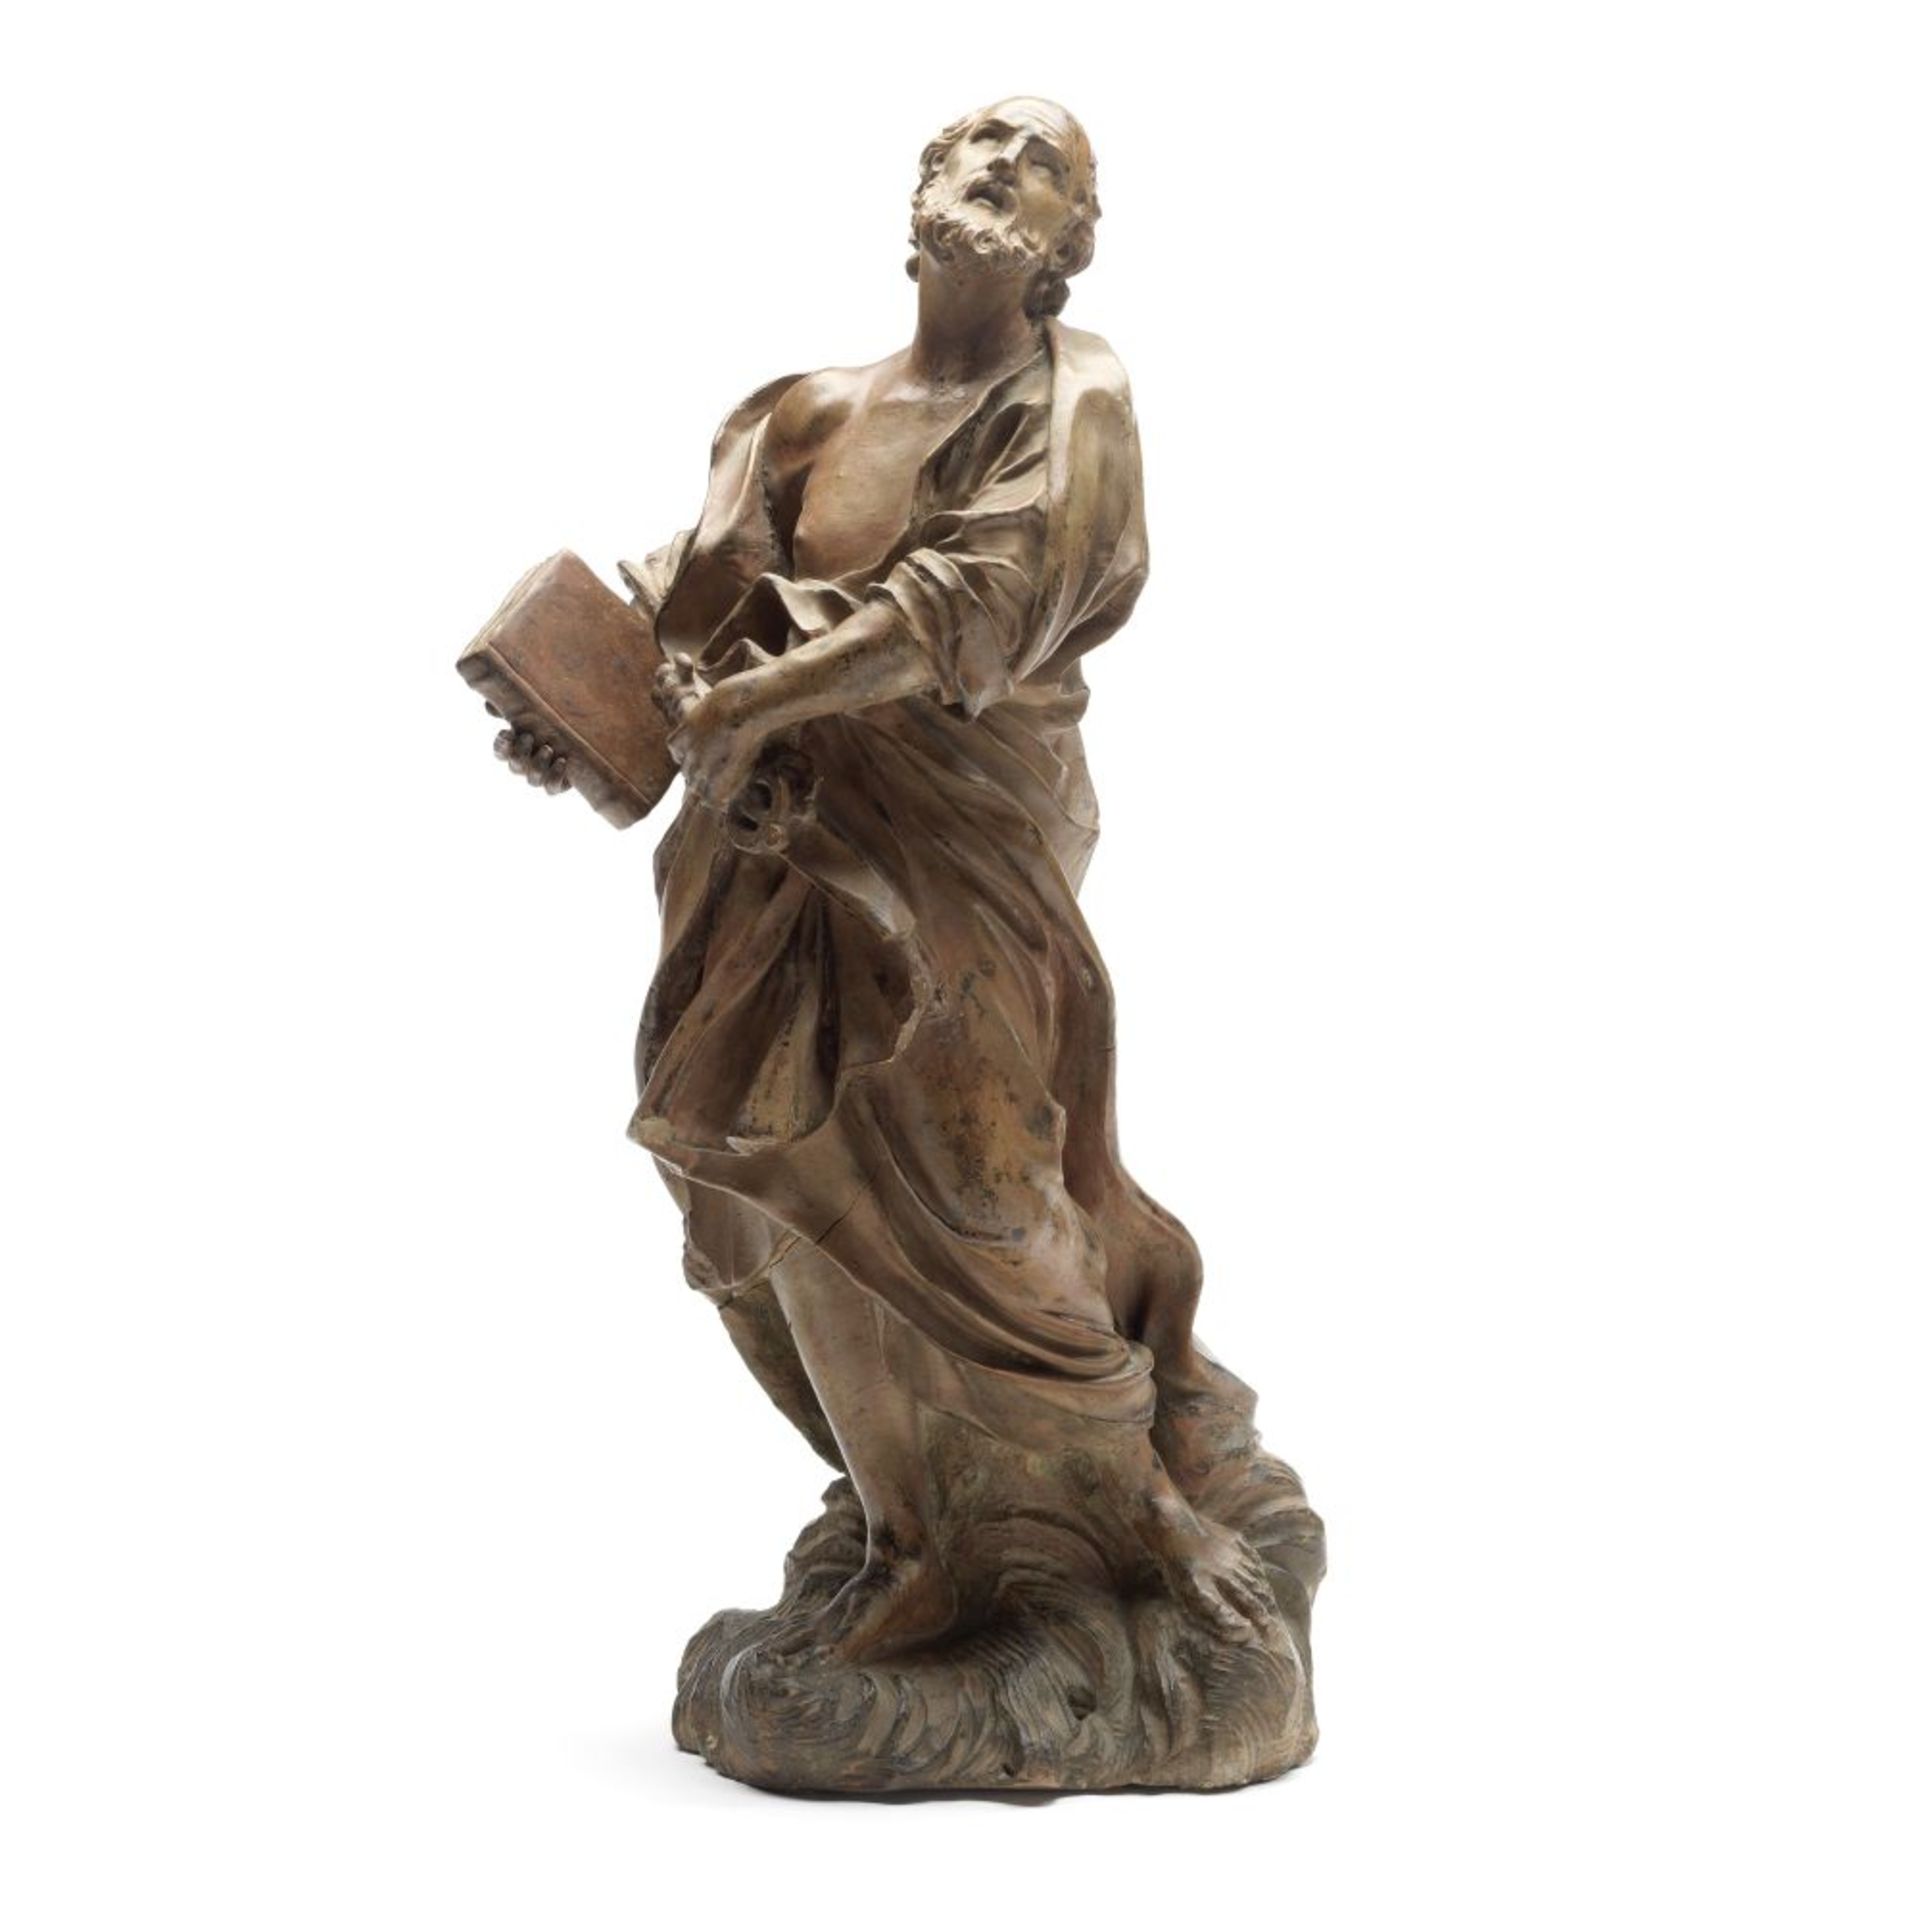 Attributed to Giuseppe Mazzuoli (Italian, 1644-125): A terracotta figure of St Peter circa 1700